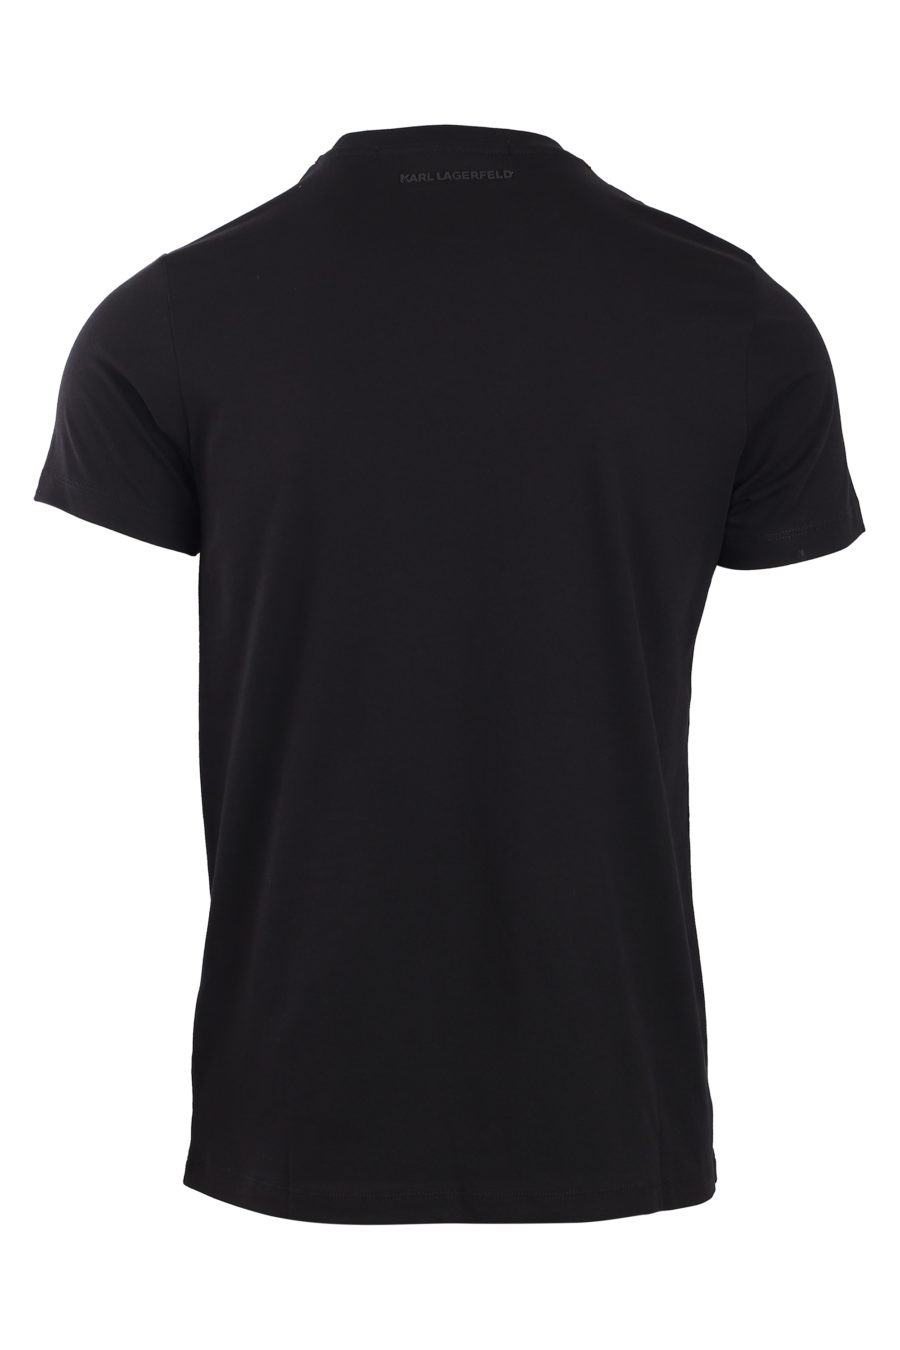 Camiseta negra con maxi logo multicolor - IMG 0798